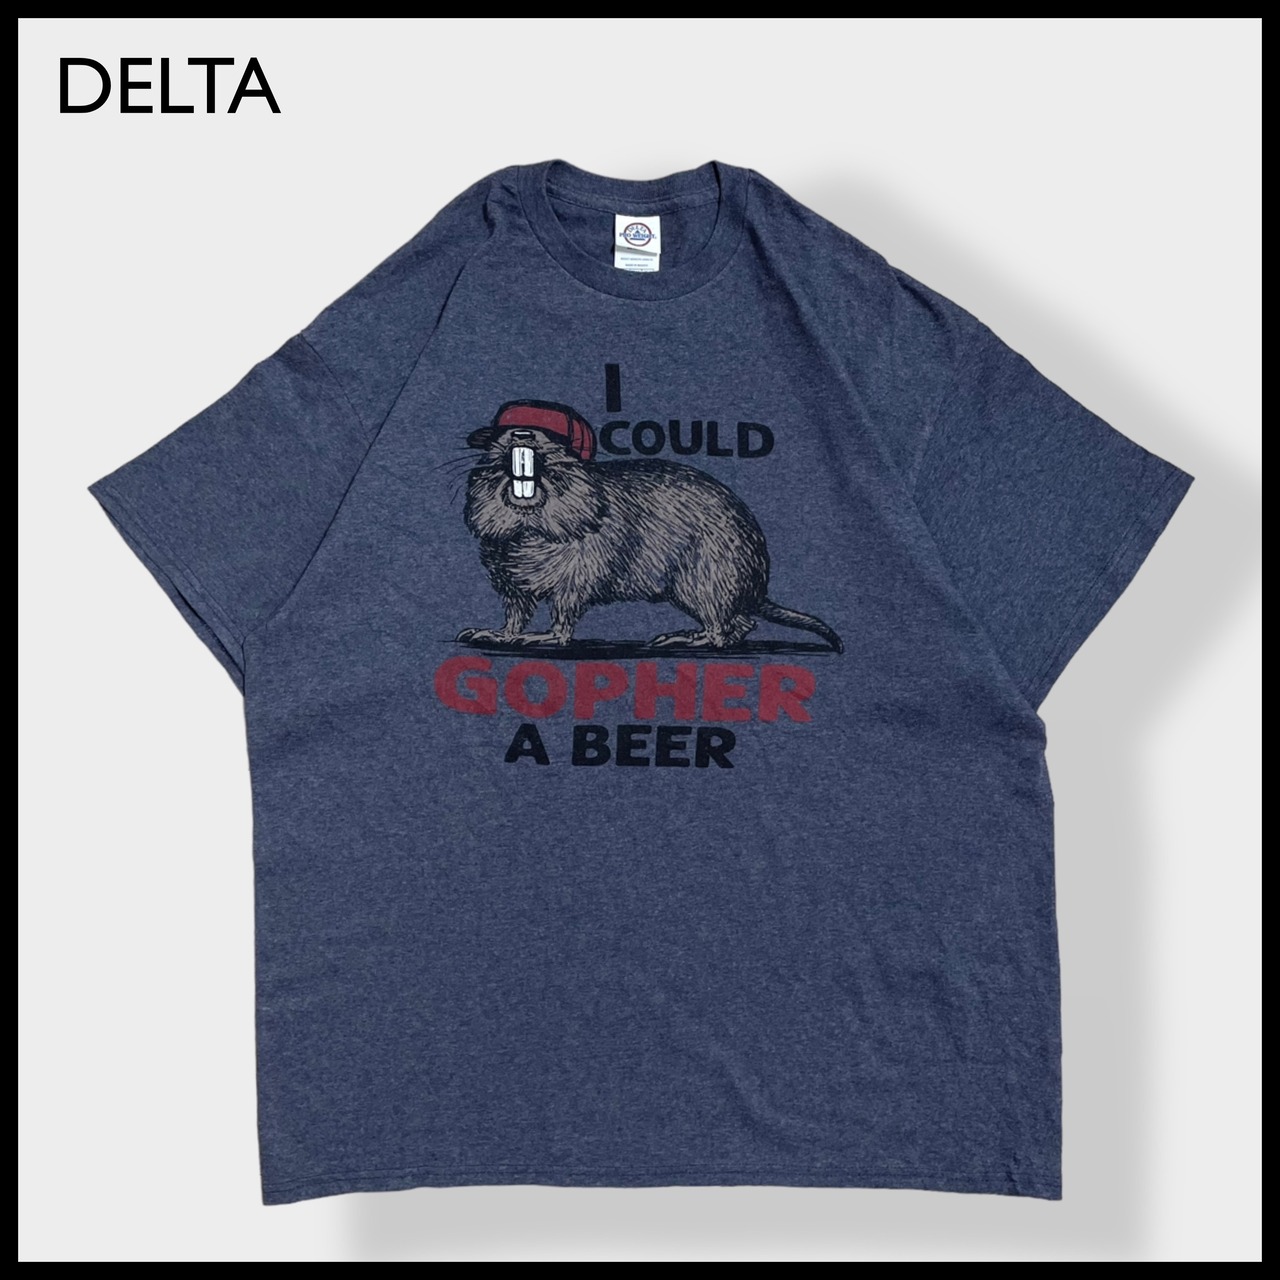 【DELTA】アニマルプリント ビーバー Tシャツ I COULD GOPHER A BEER 半袖 X-LARGE ビッグサイズ メキシコ製 デルタ US古着